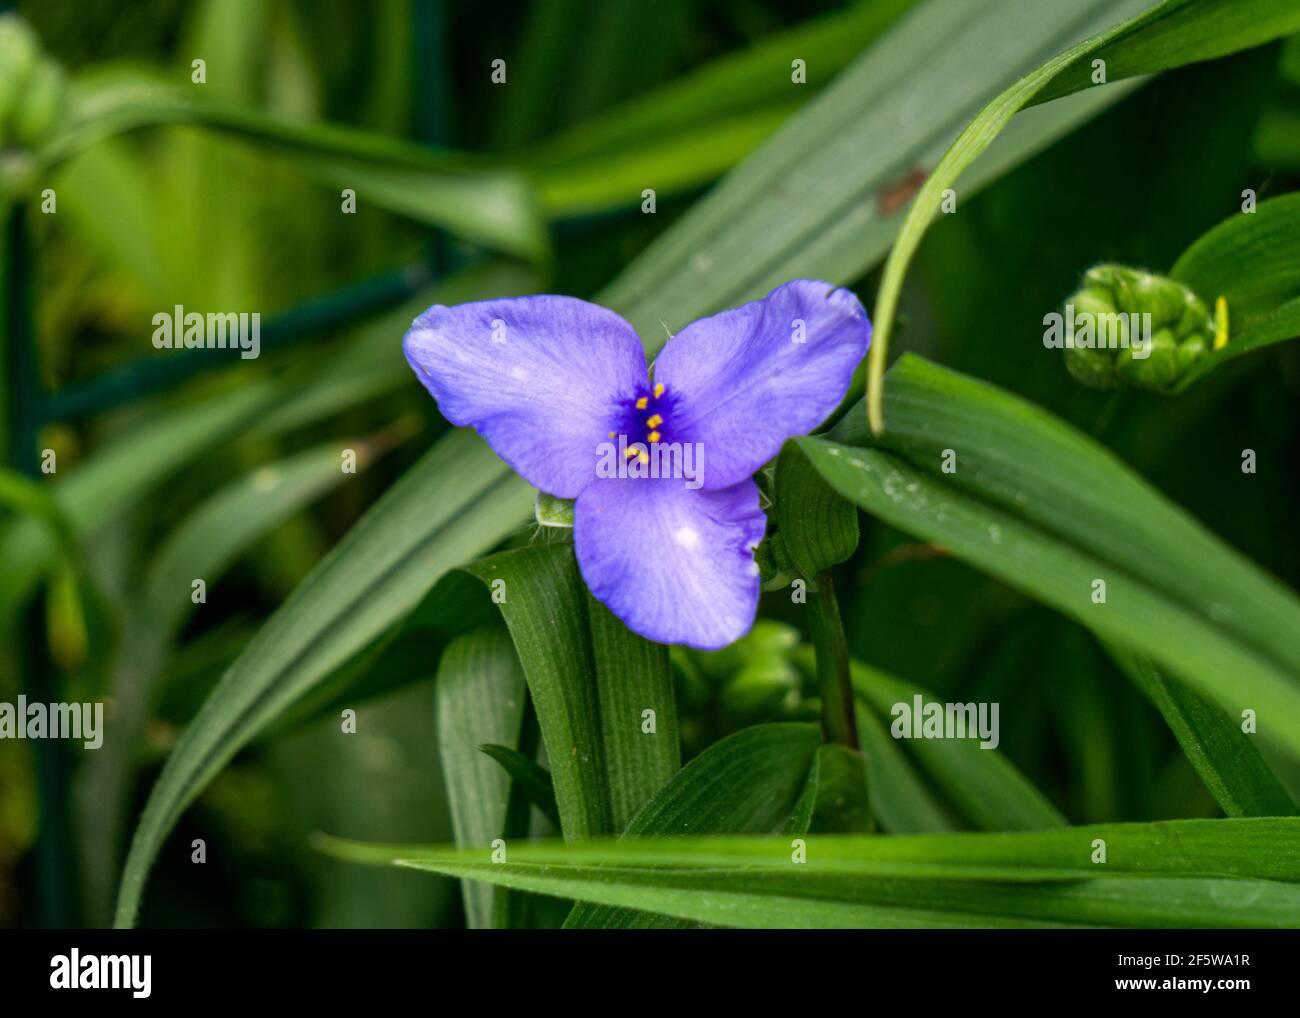 Beautiful blue Ohio Tradescantia flower among green leaves. Stock Photo